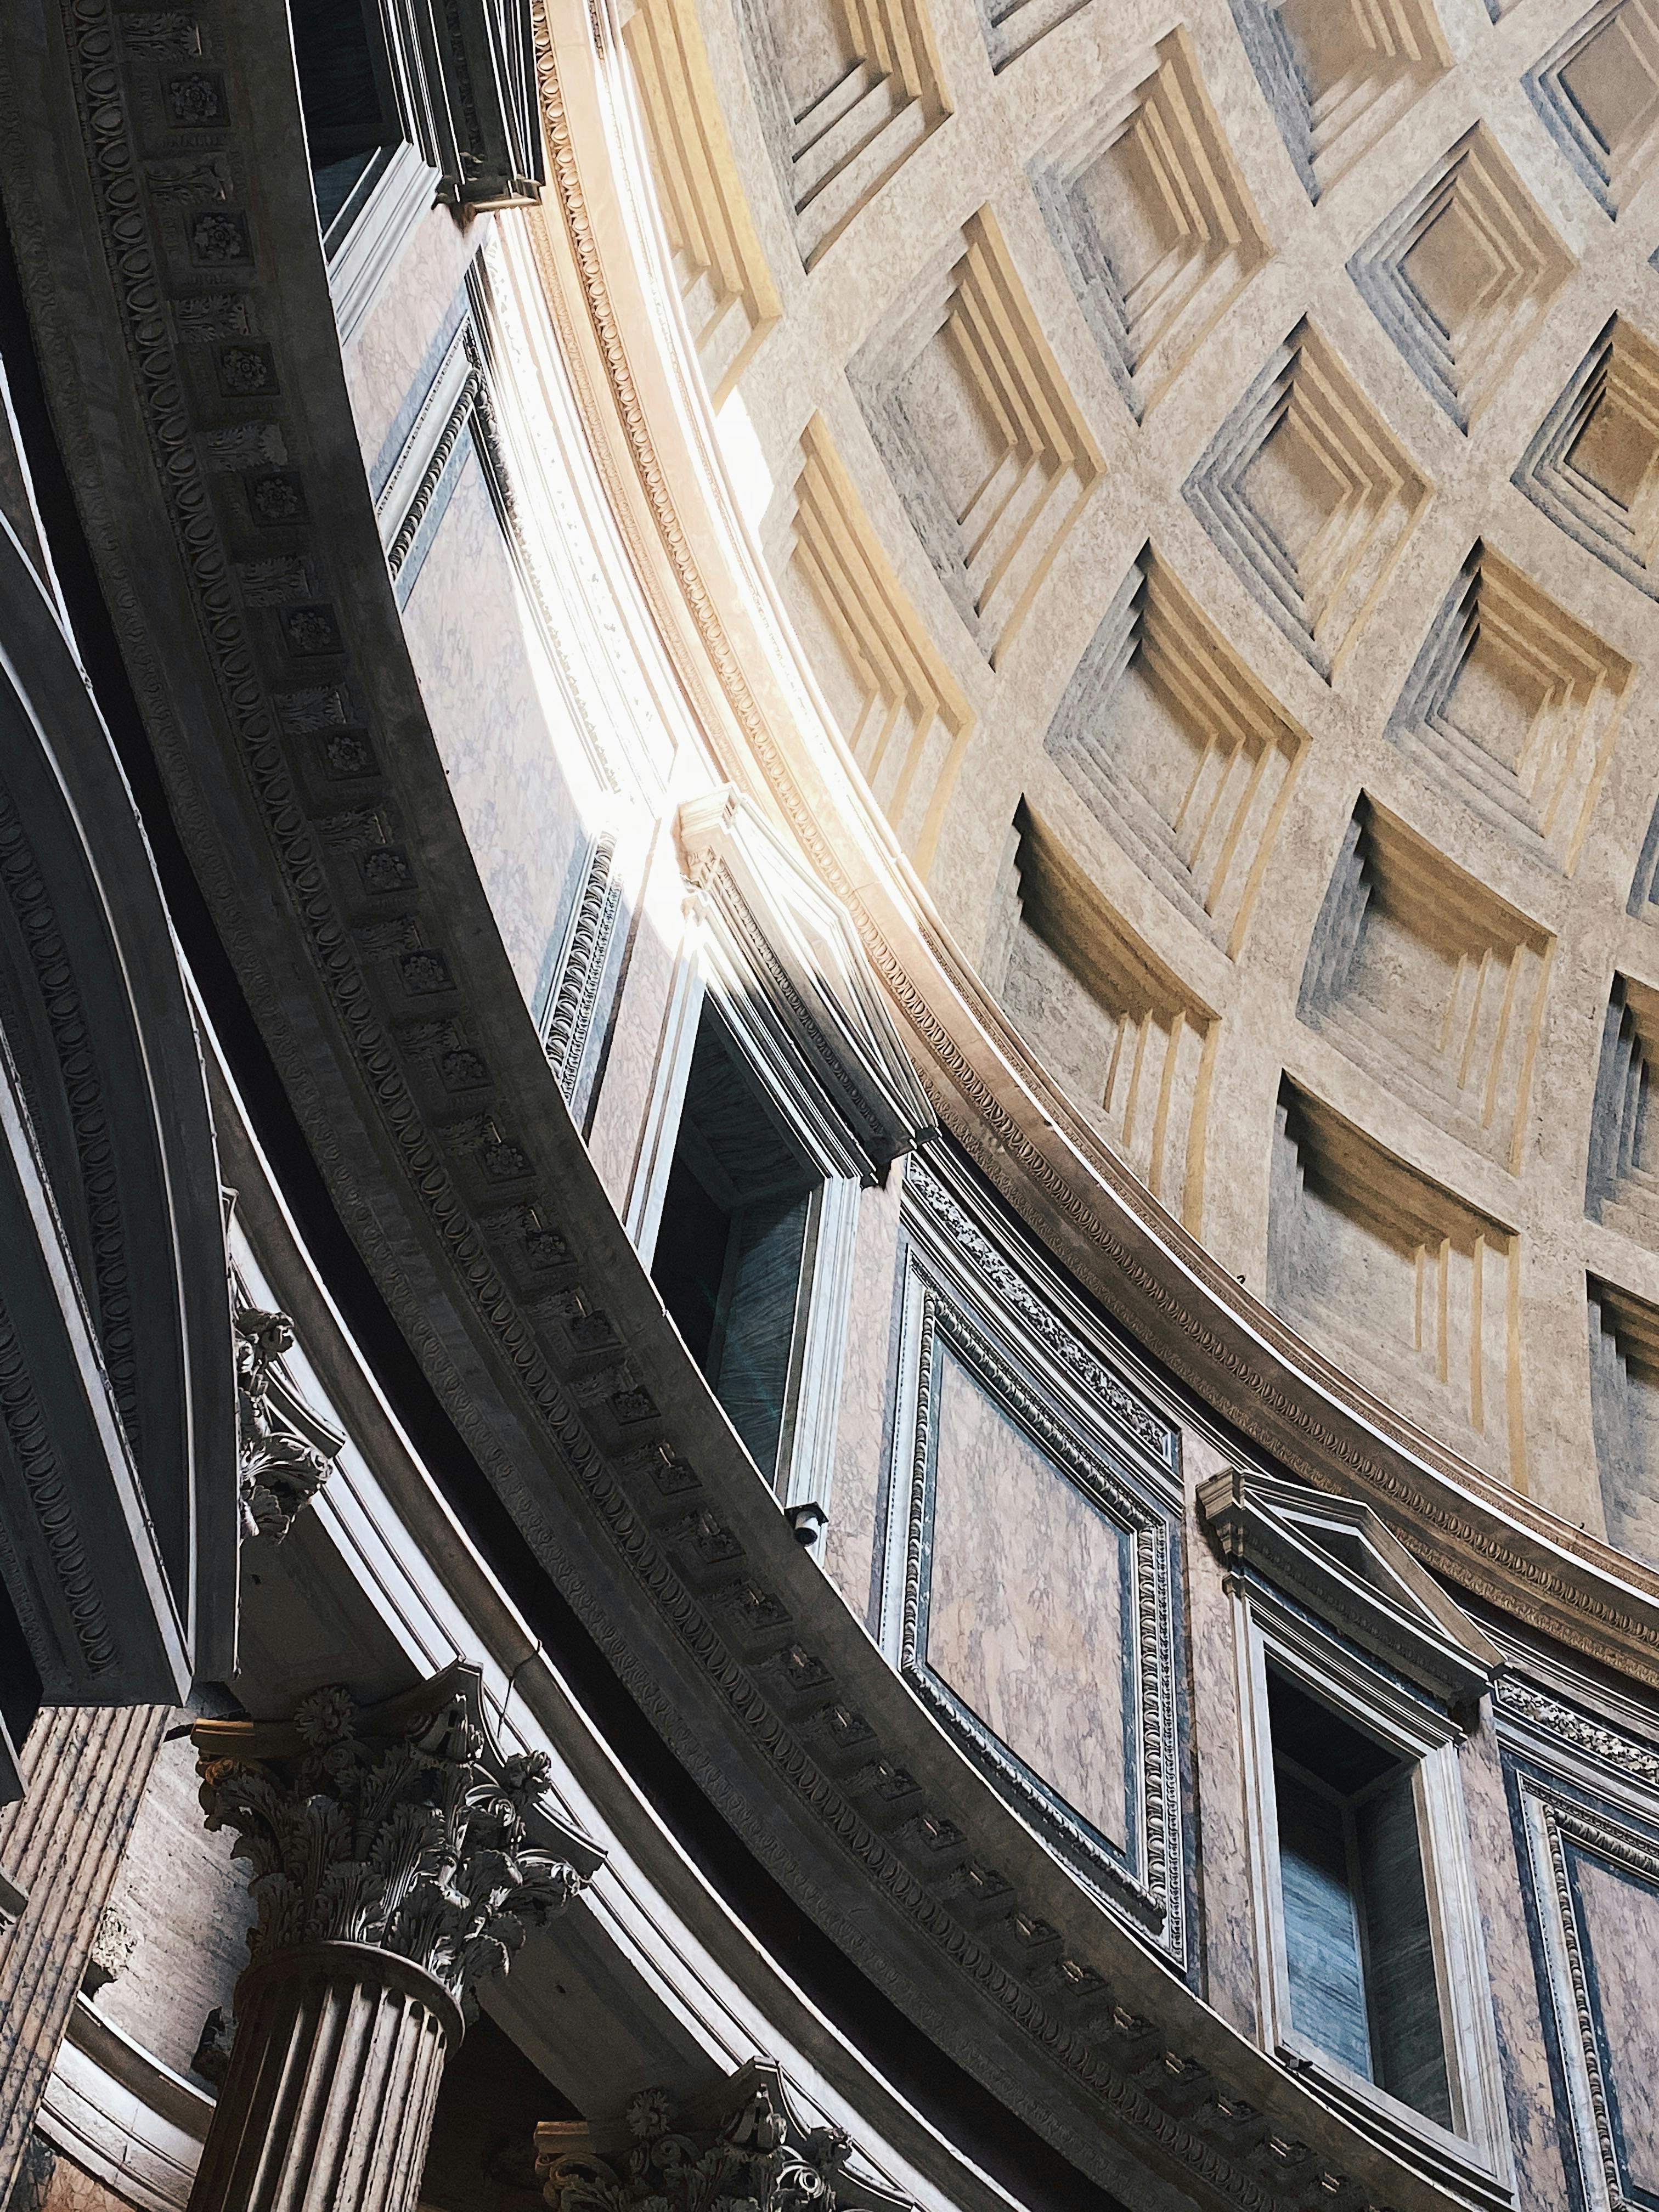 pantheon rome interior